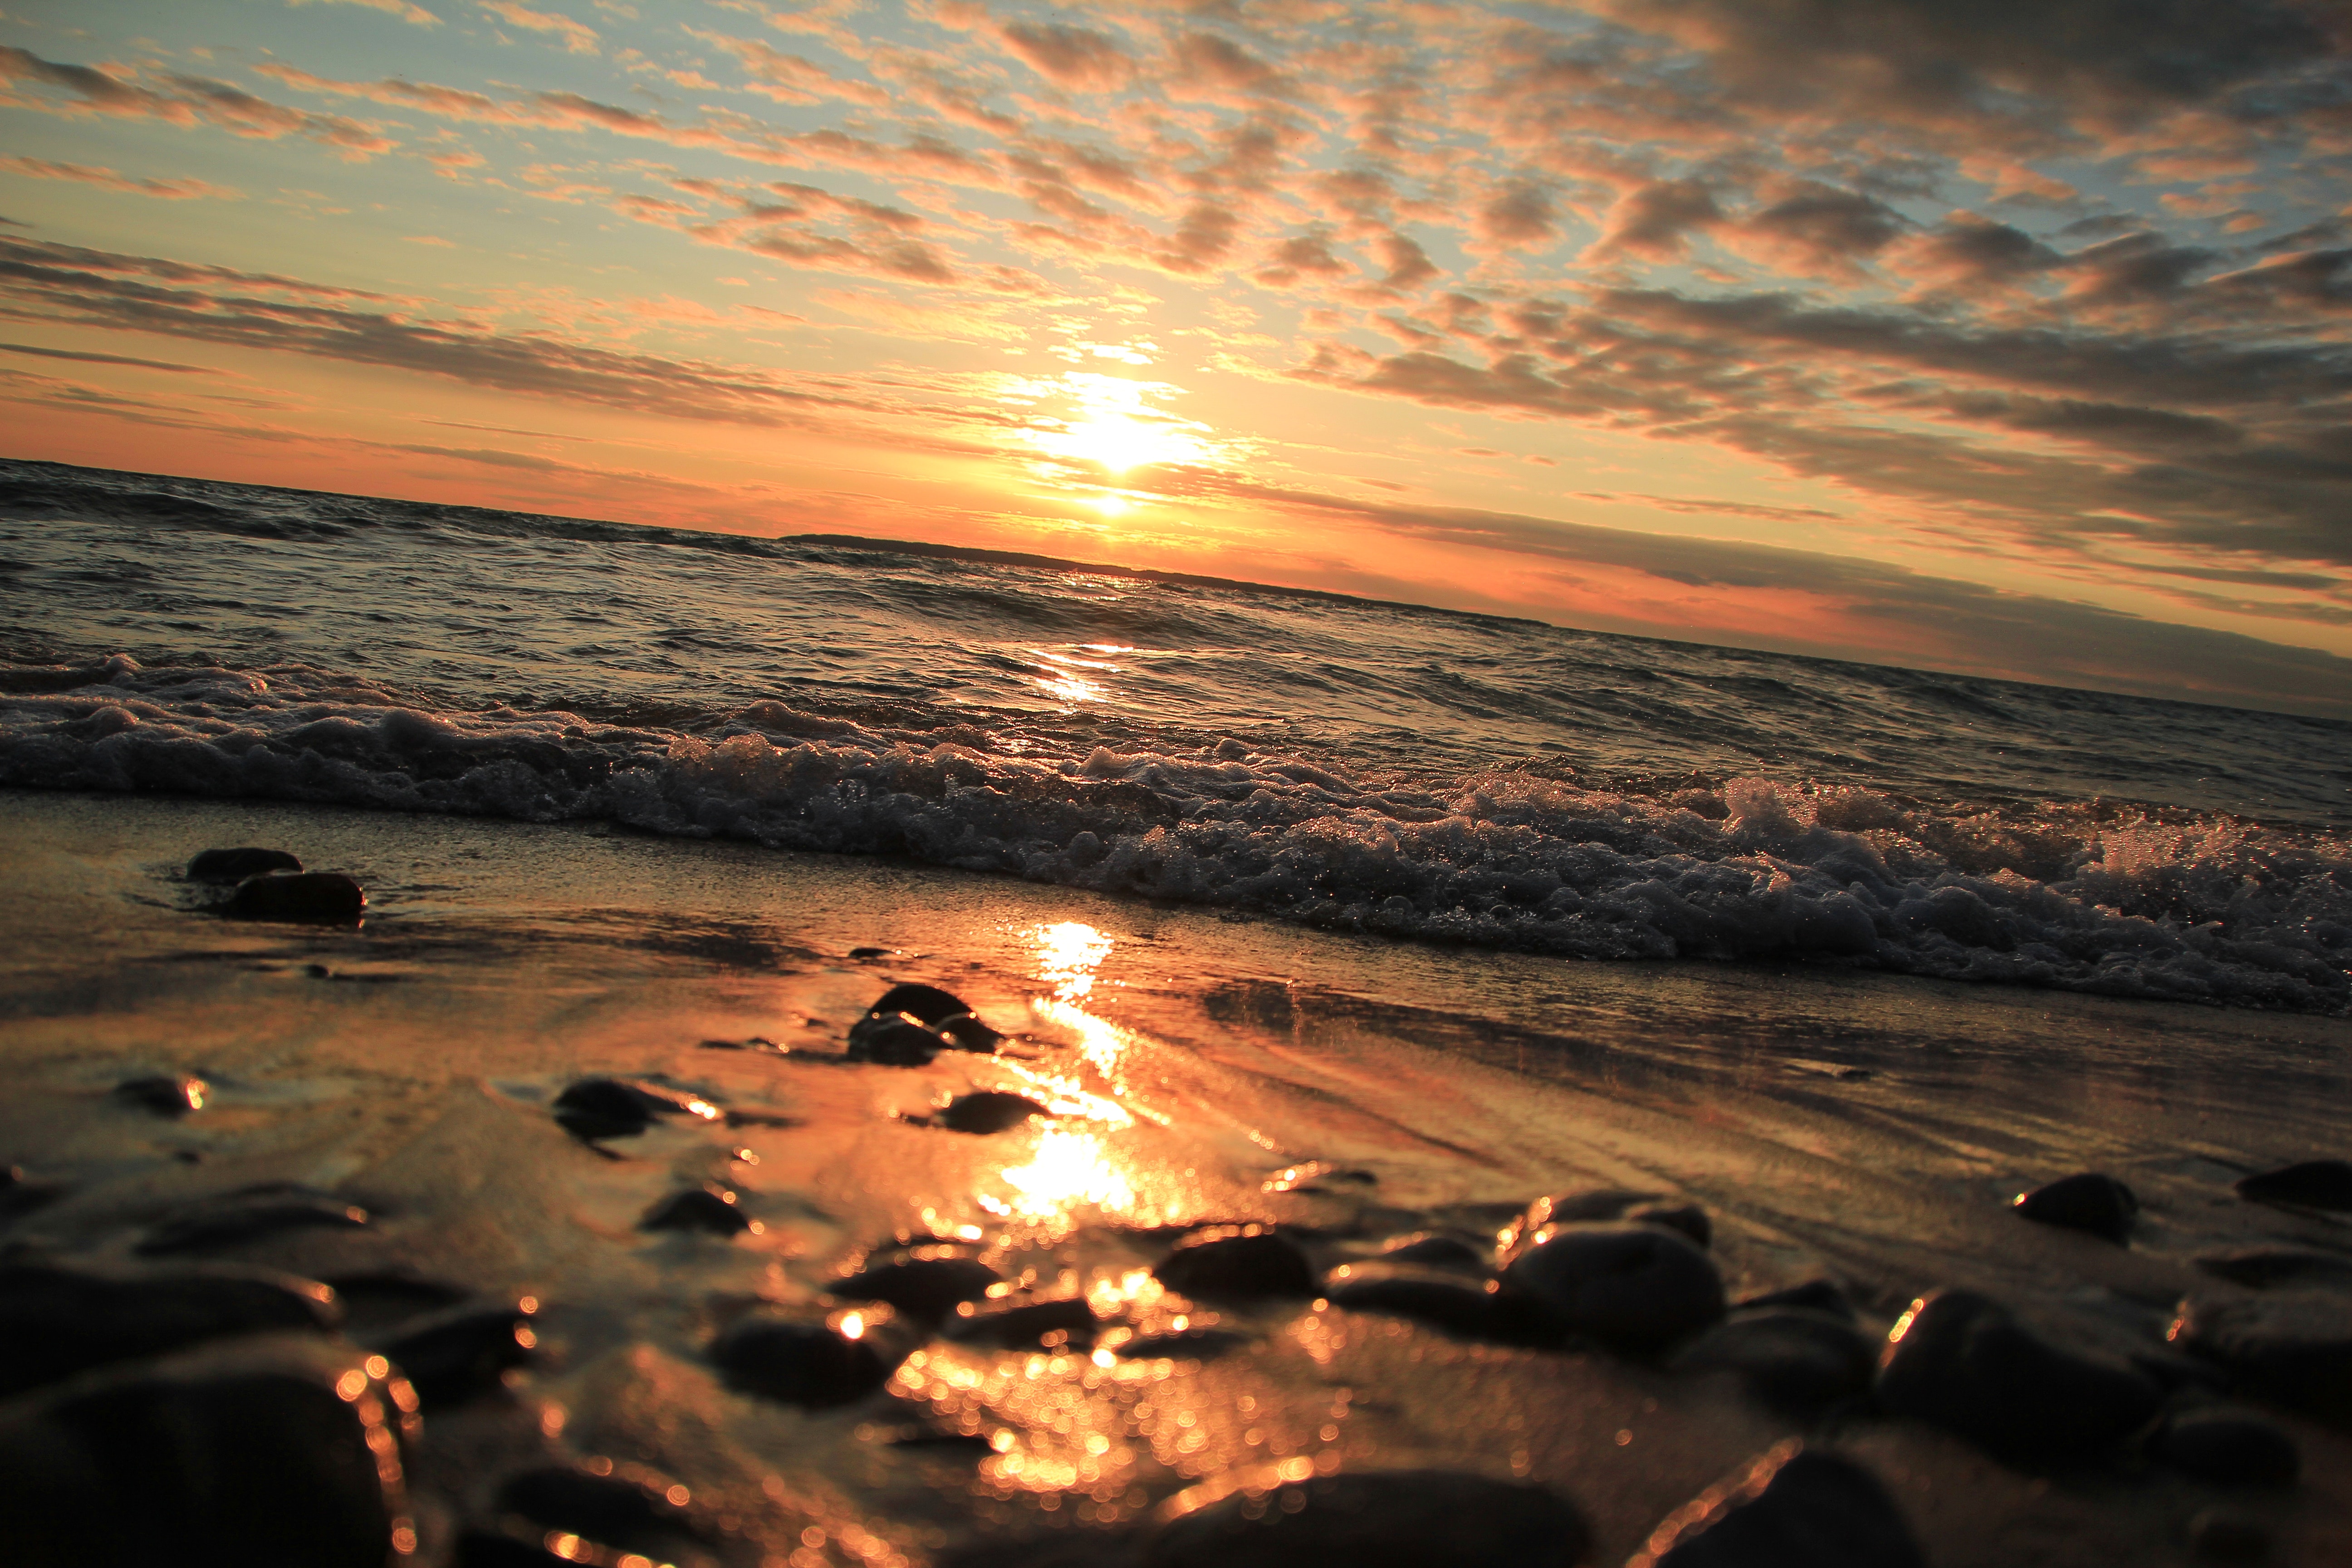 Ocean Taken Photo during Sunset, Beach, Pebbles, Water, Travel, HQ Photo